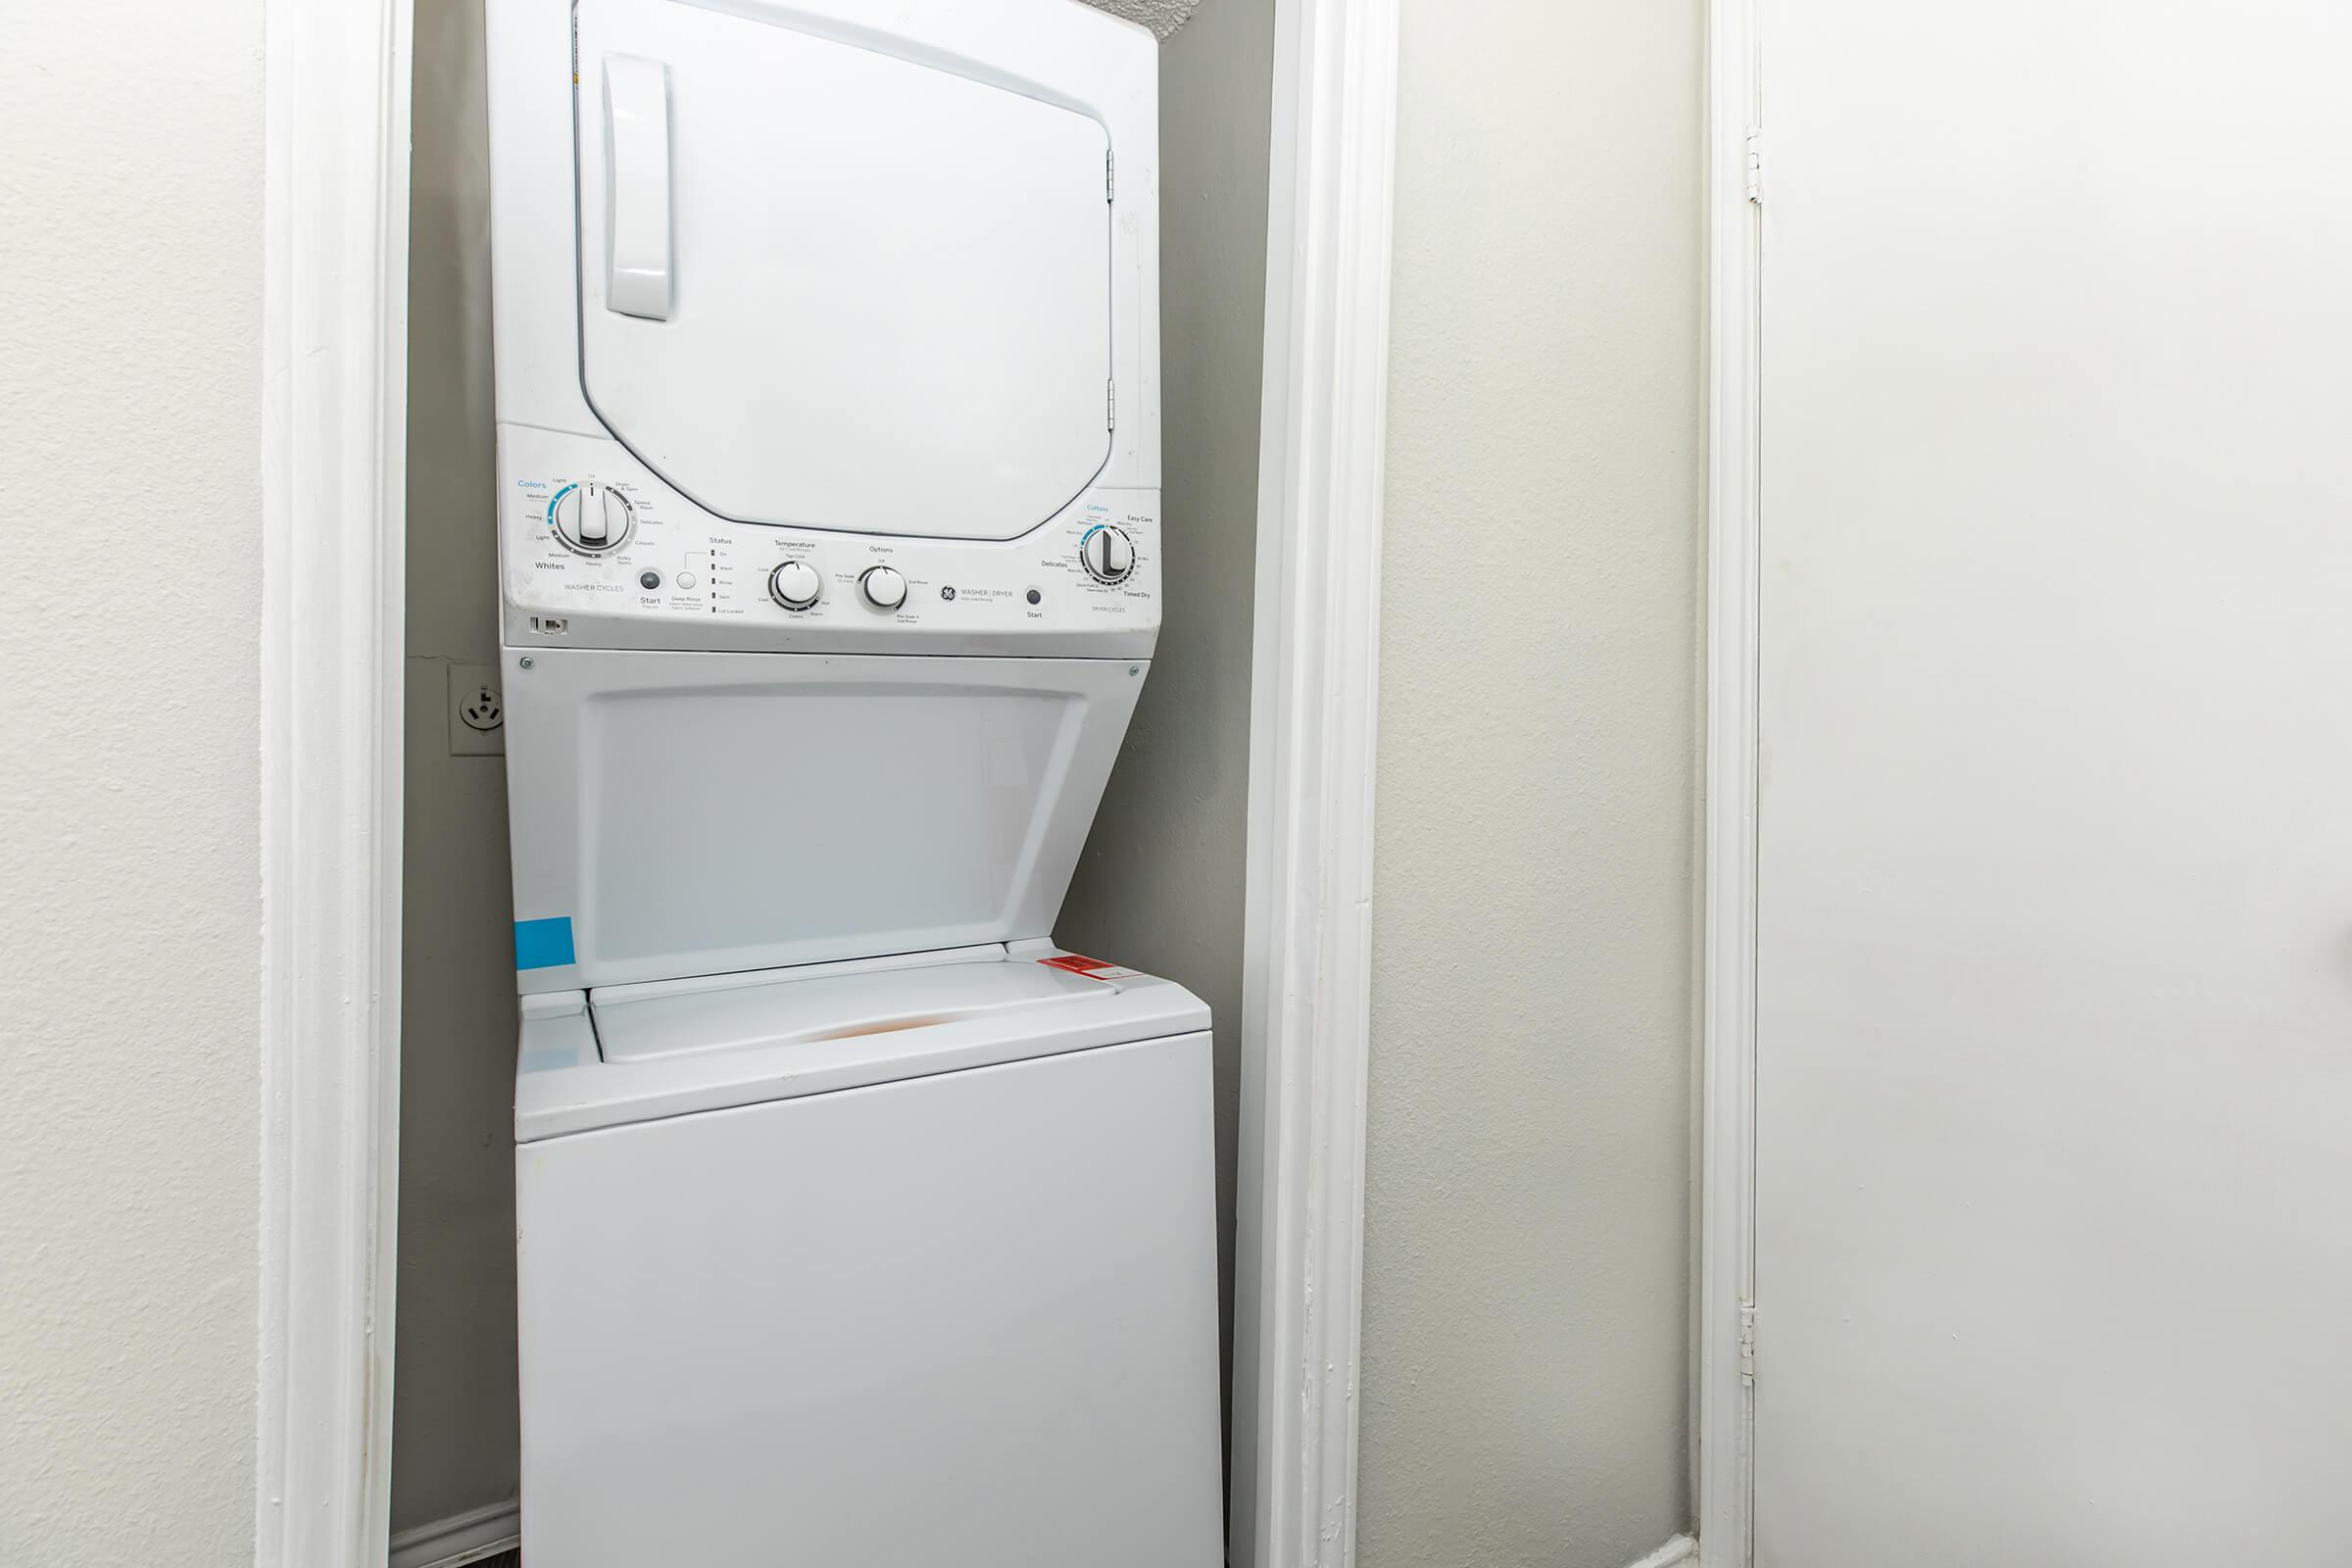 a refrigerator freezer sitting next to a door